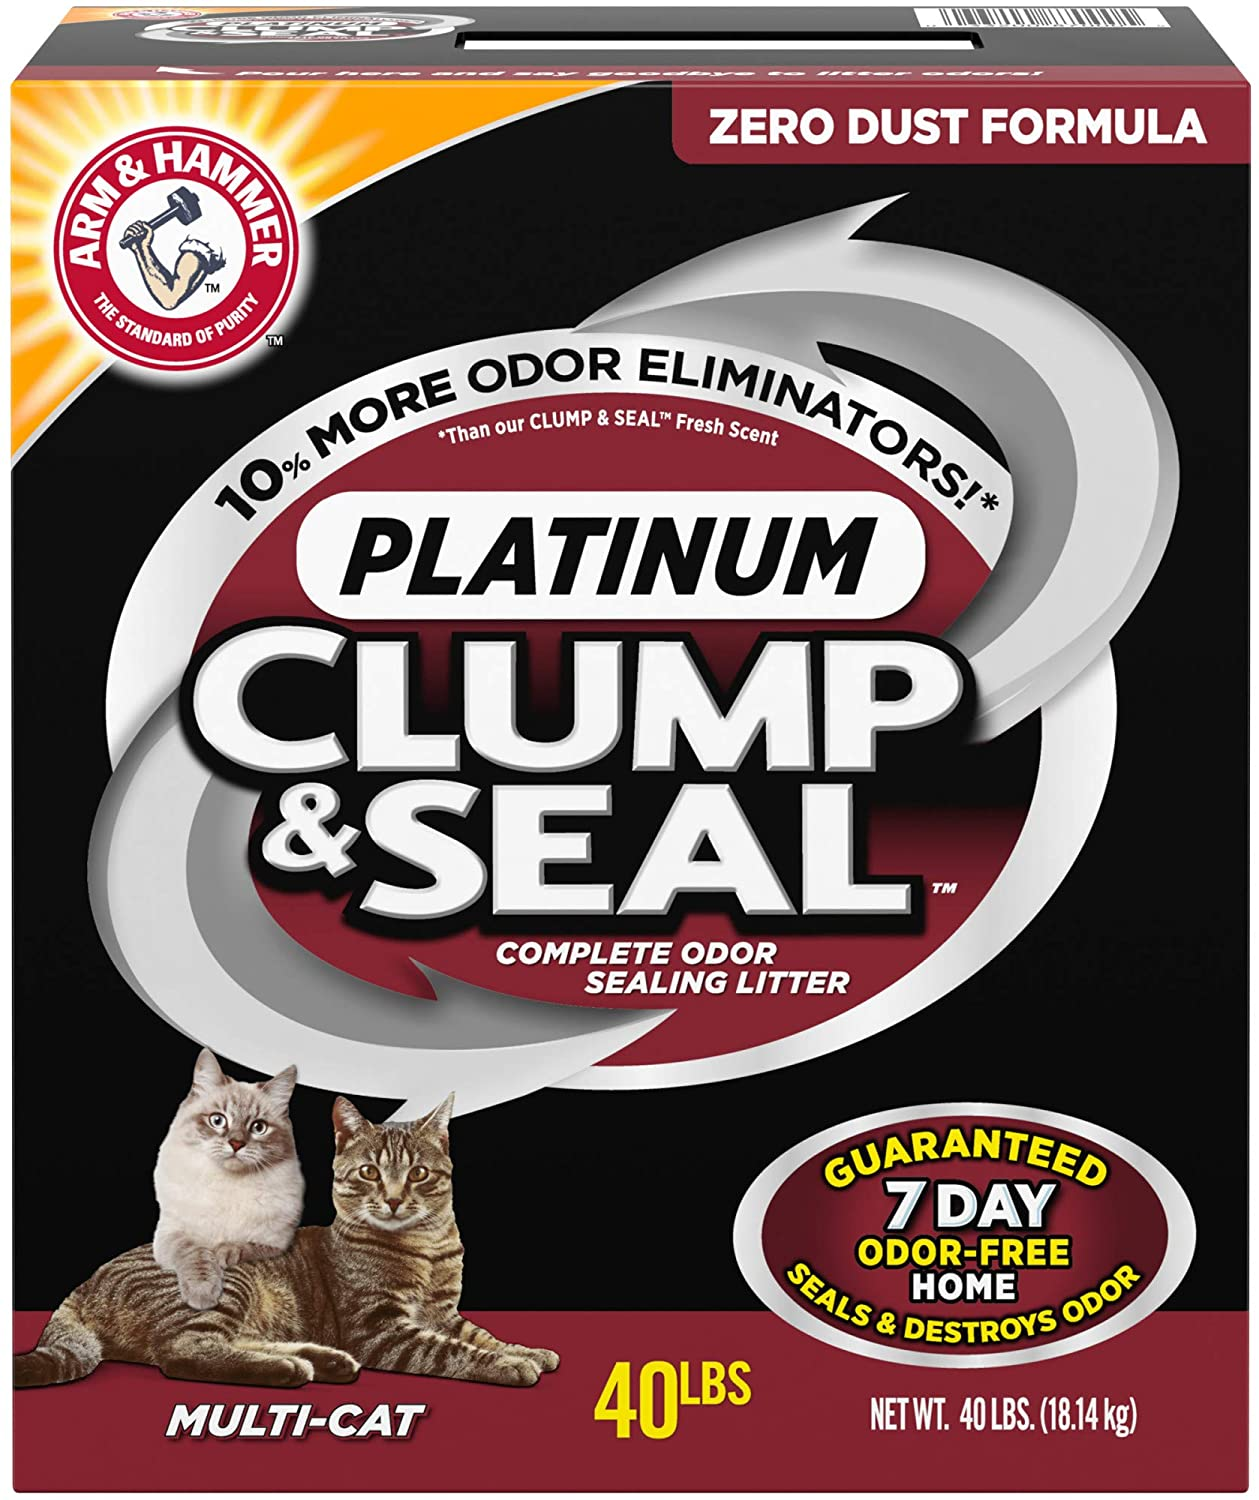 Amazon.com : Arm & Hammer Clump & Seal Platinum Cat Litter, Multi-Cat, 40 lb : Pet Supplies $21.33